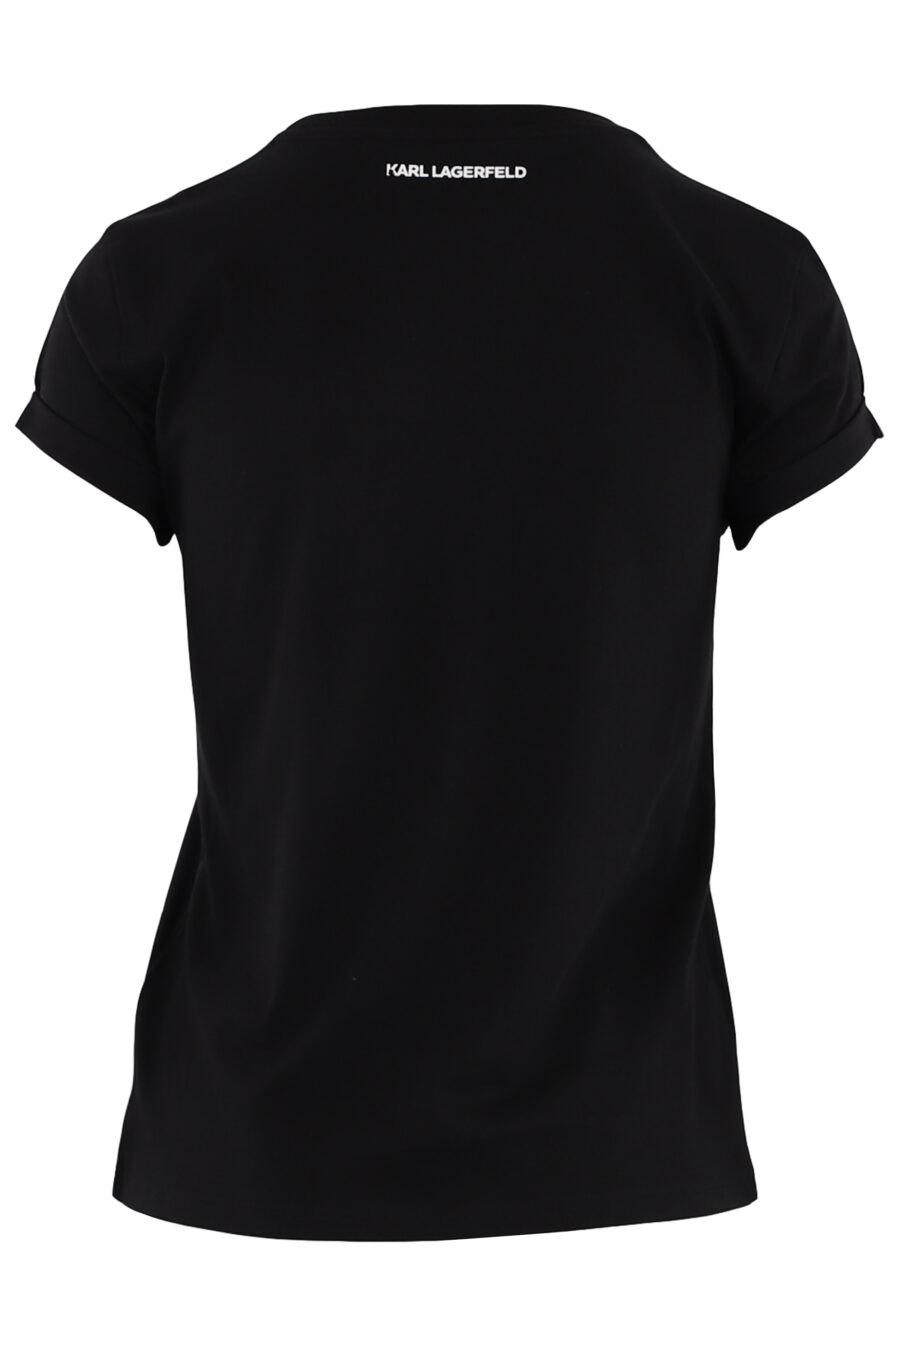 T-shirt preta com bolso com o logótipo "karl" - IMG 0726